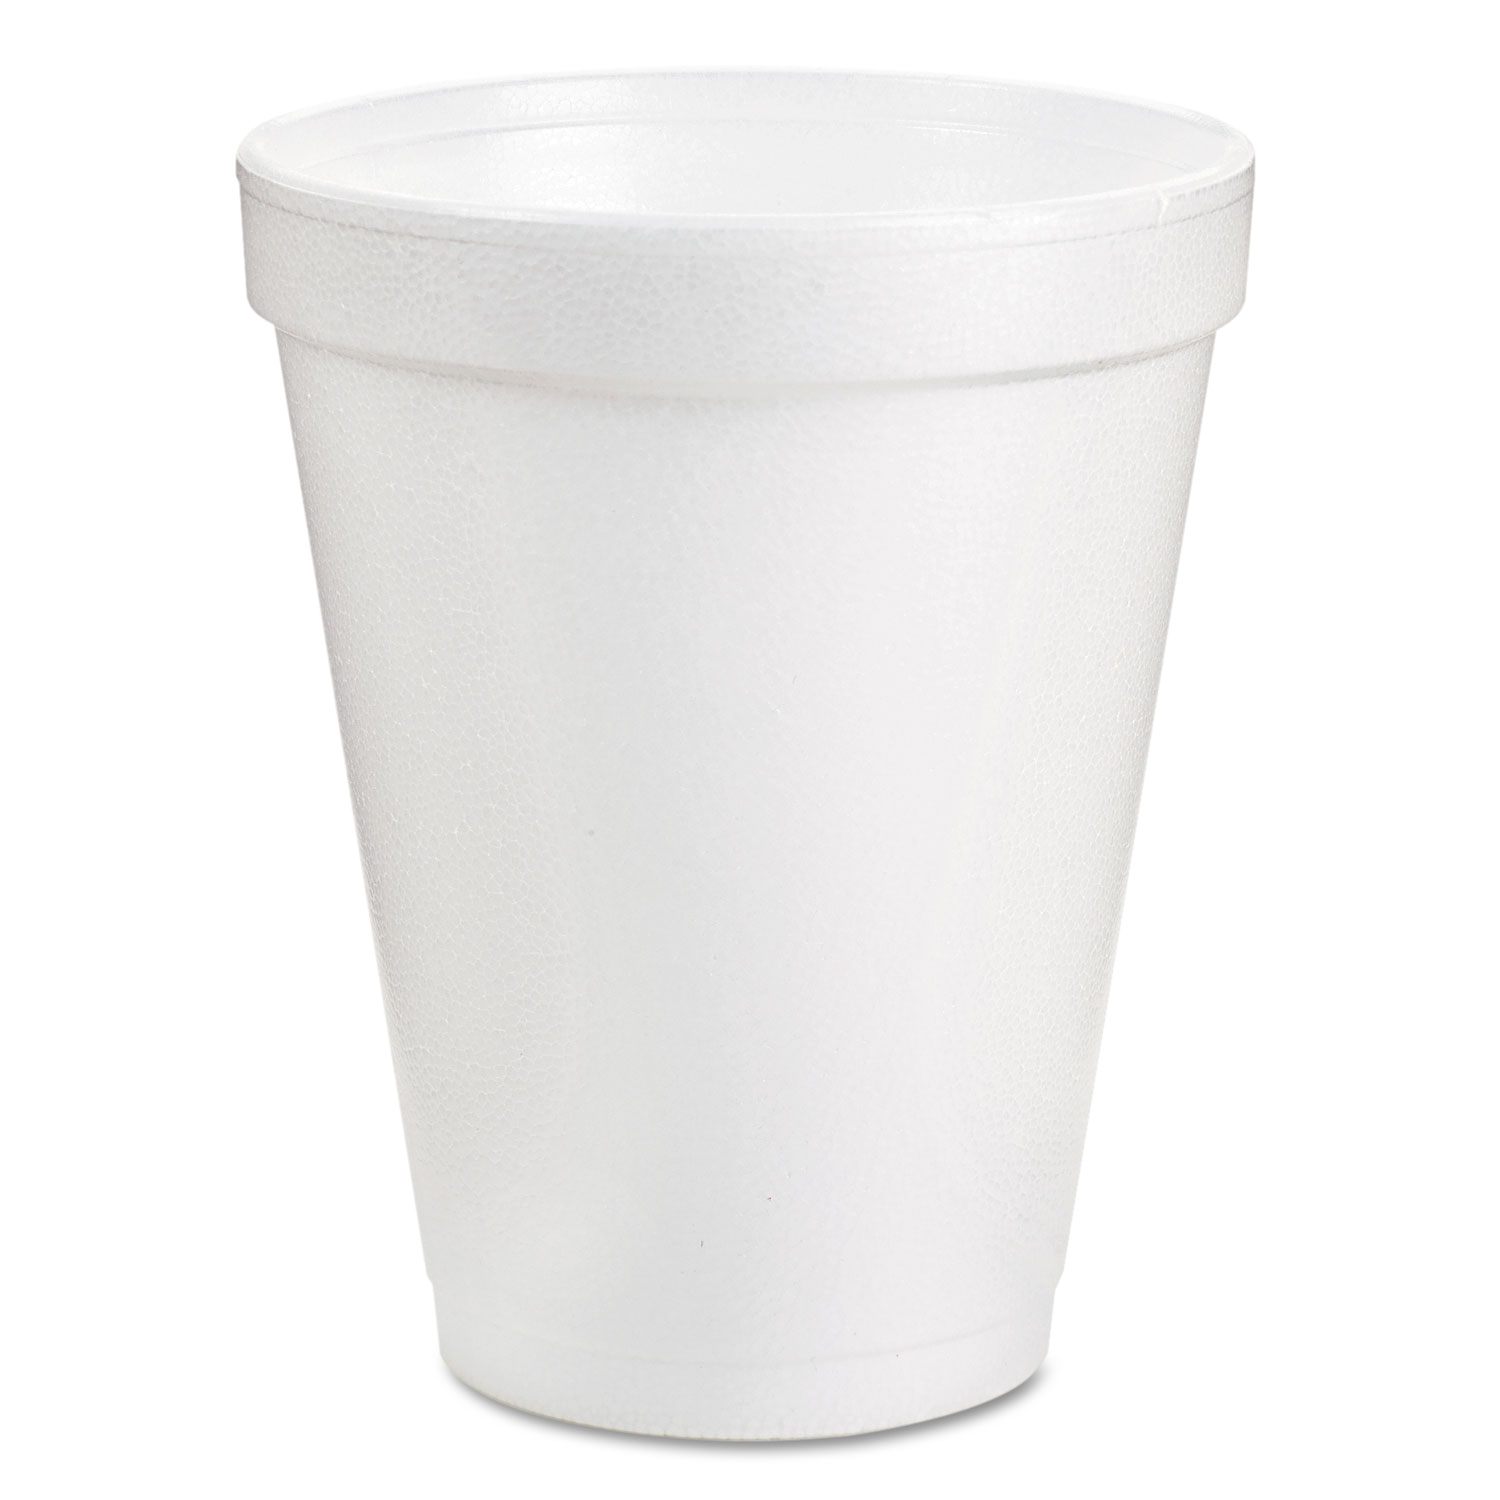 20 oz., Foam Drink Cups, White (500 ct.)